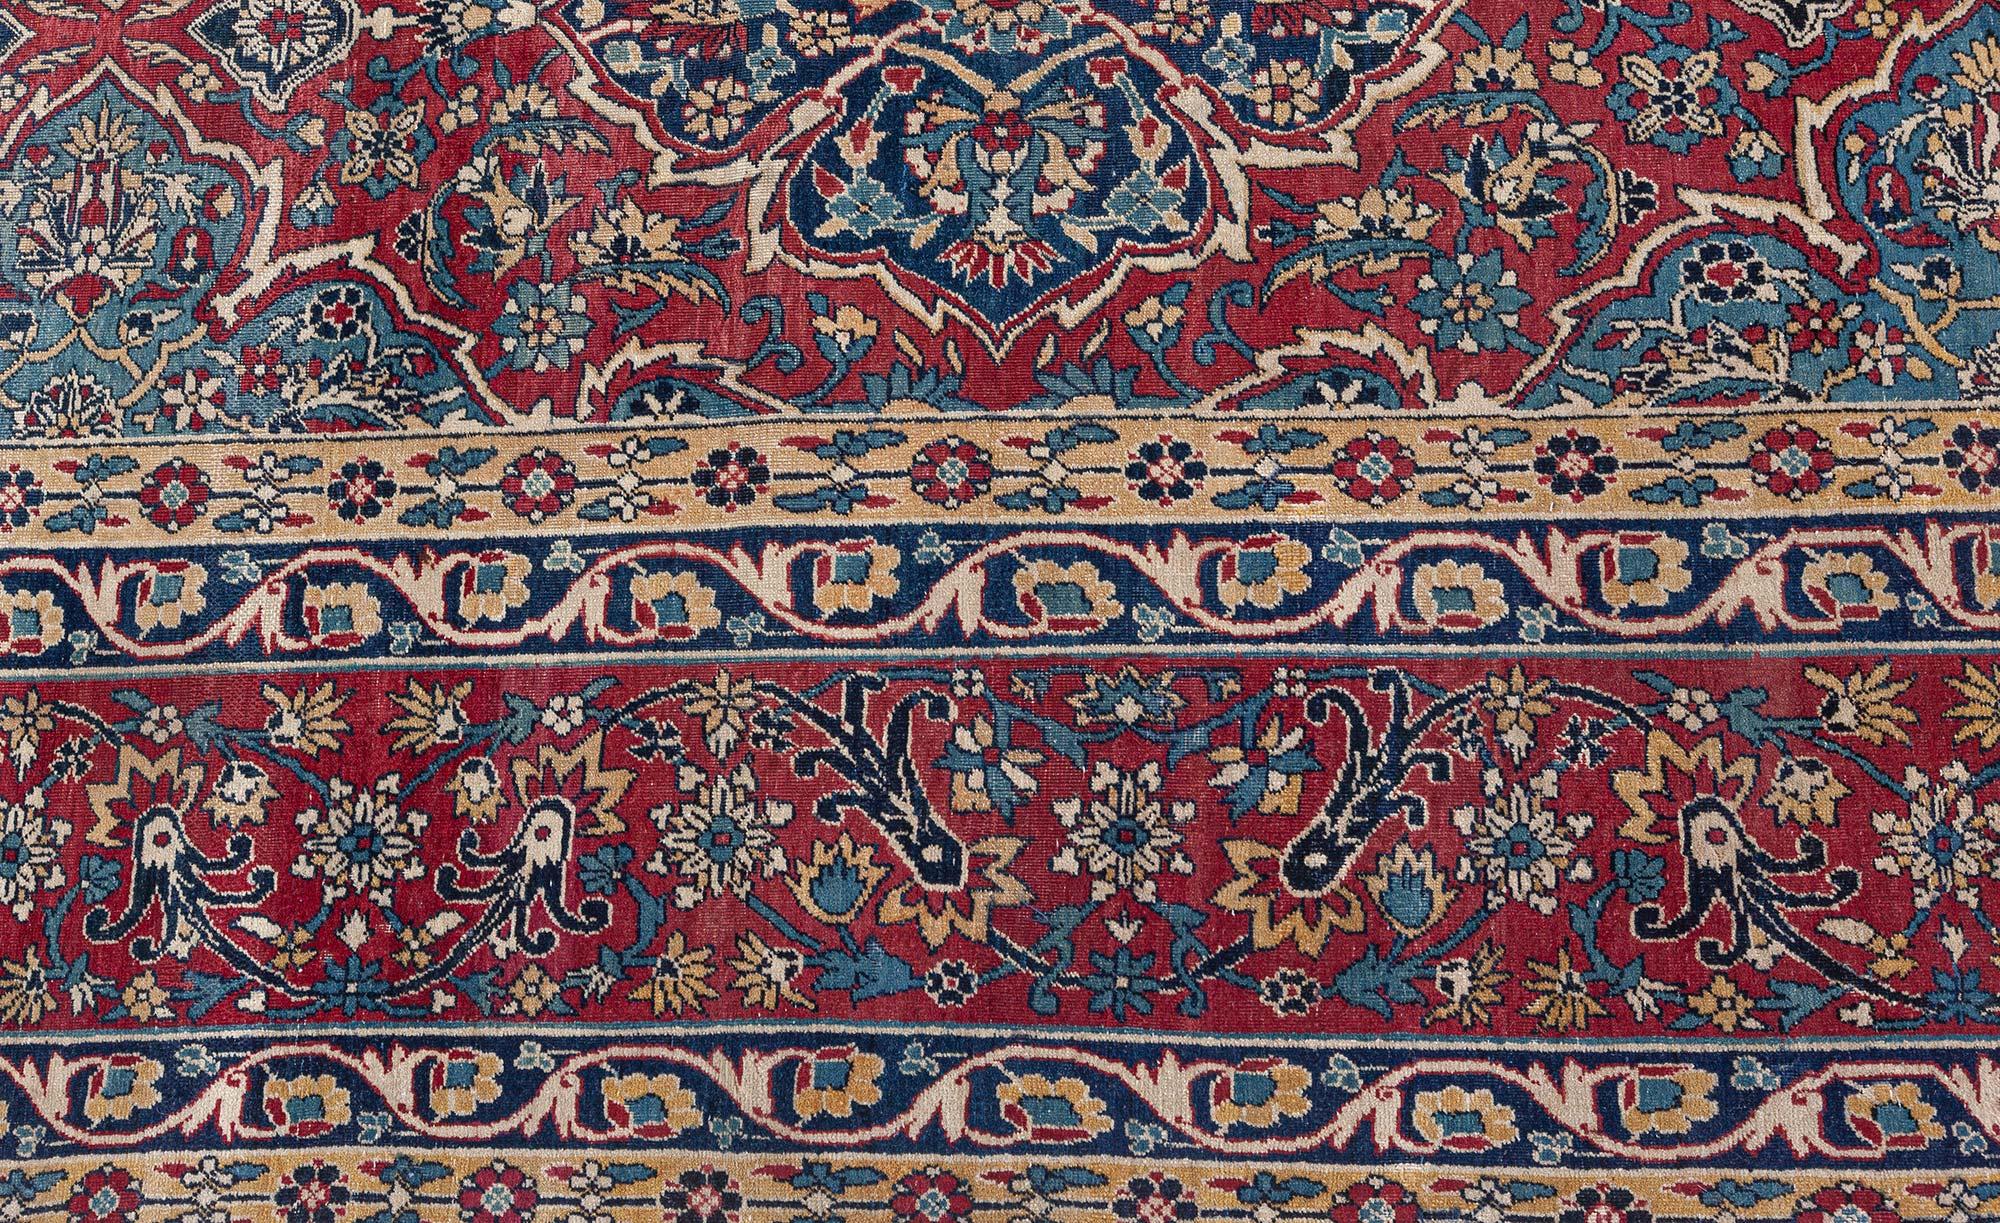 Antique Persian Kirman red blue beige Rug
Size: 9'0